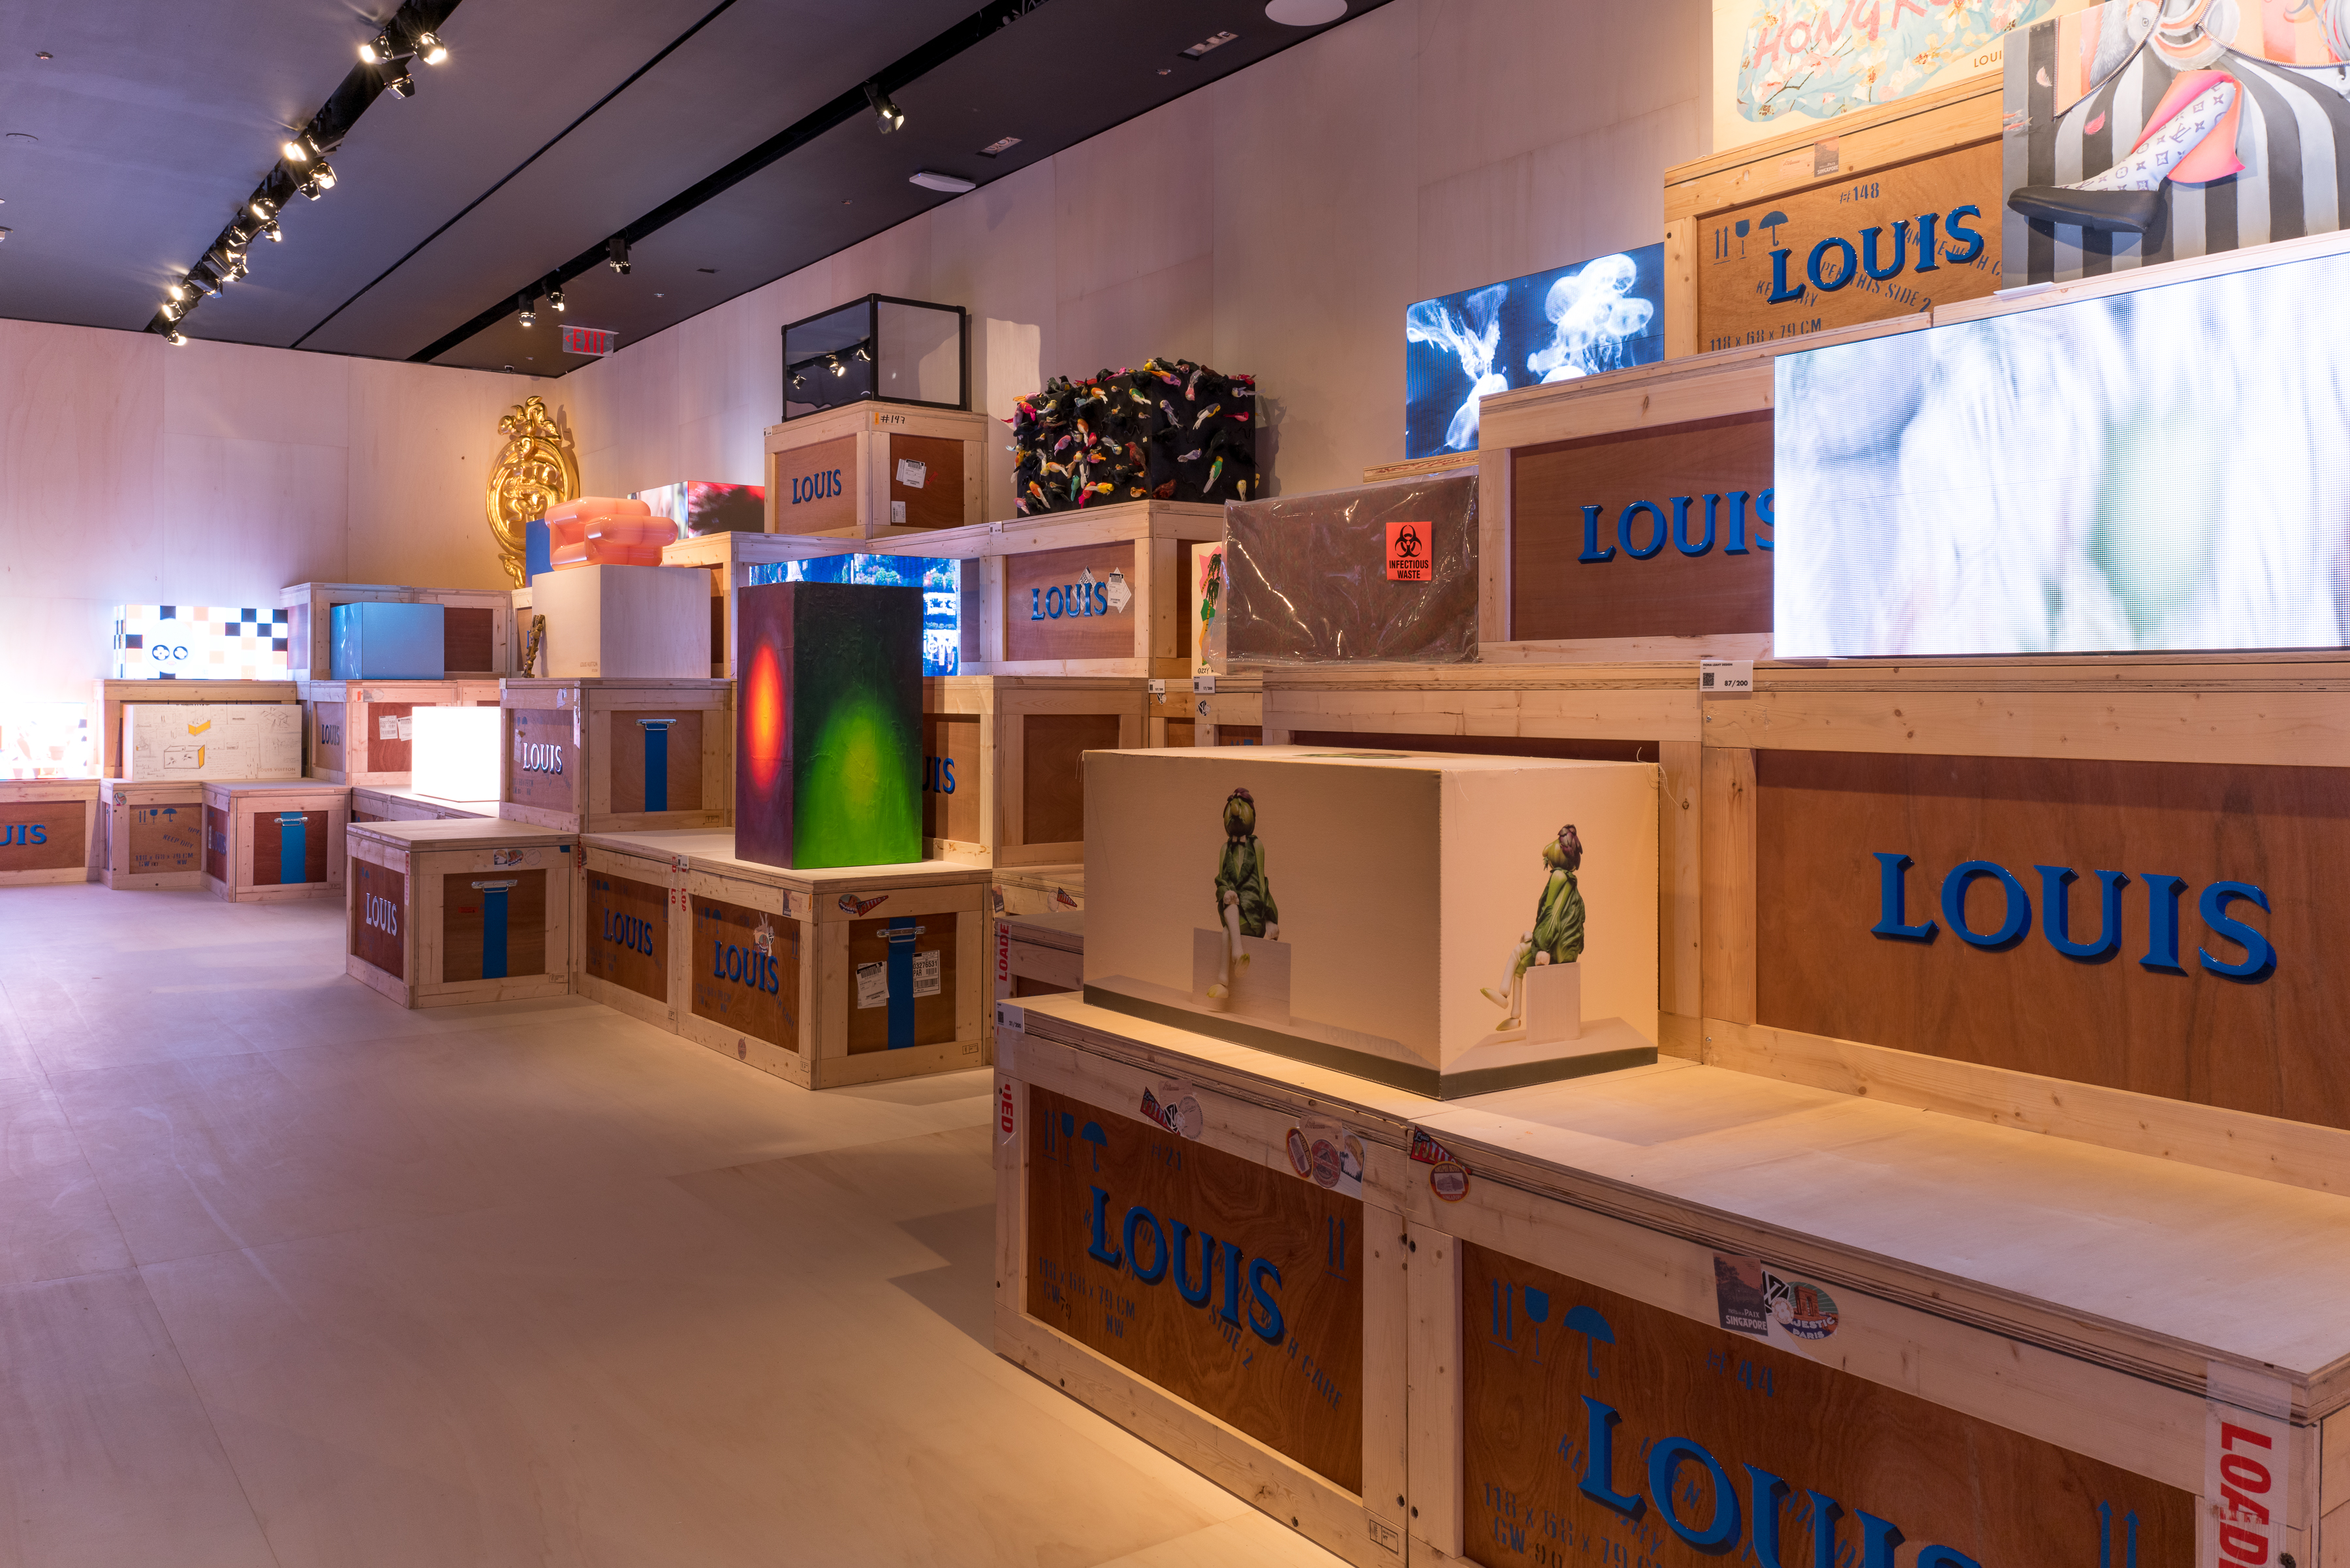 Inside Louis Vuitton's '200 Trunks, 200 Visionaries' Exhibit